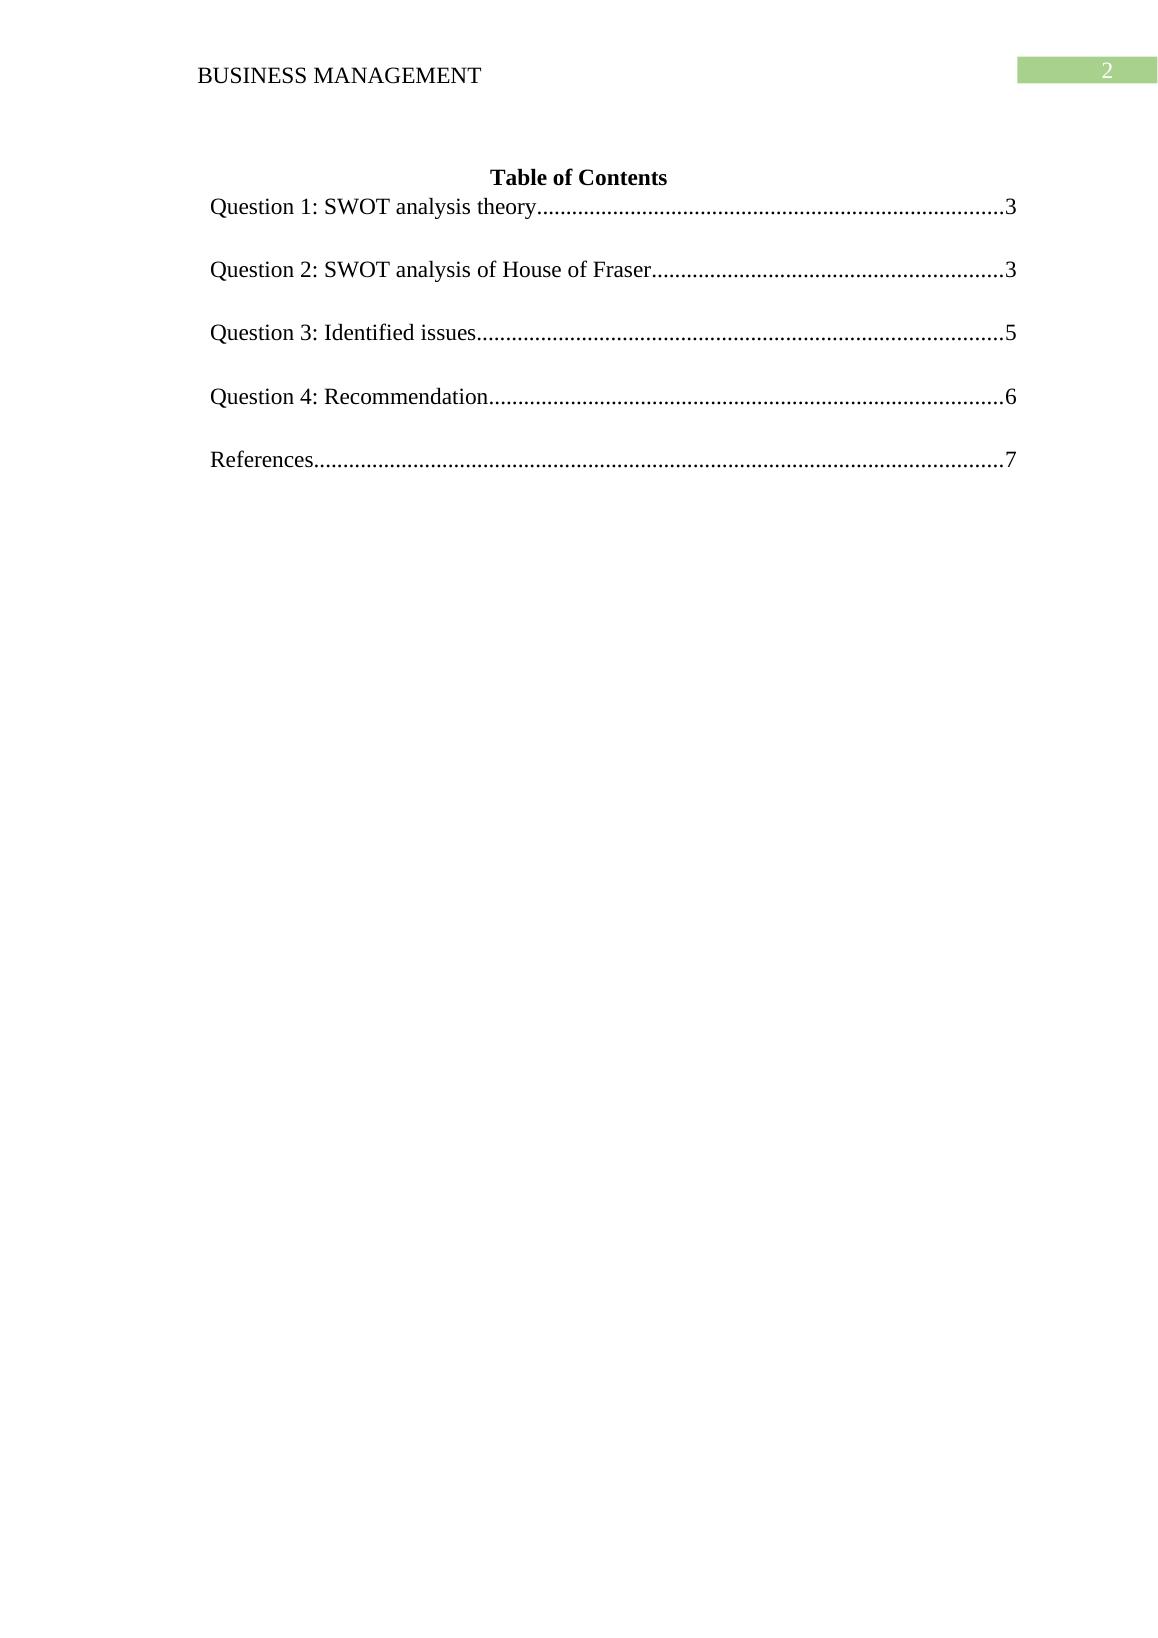 business management assignment pdf